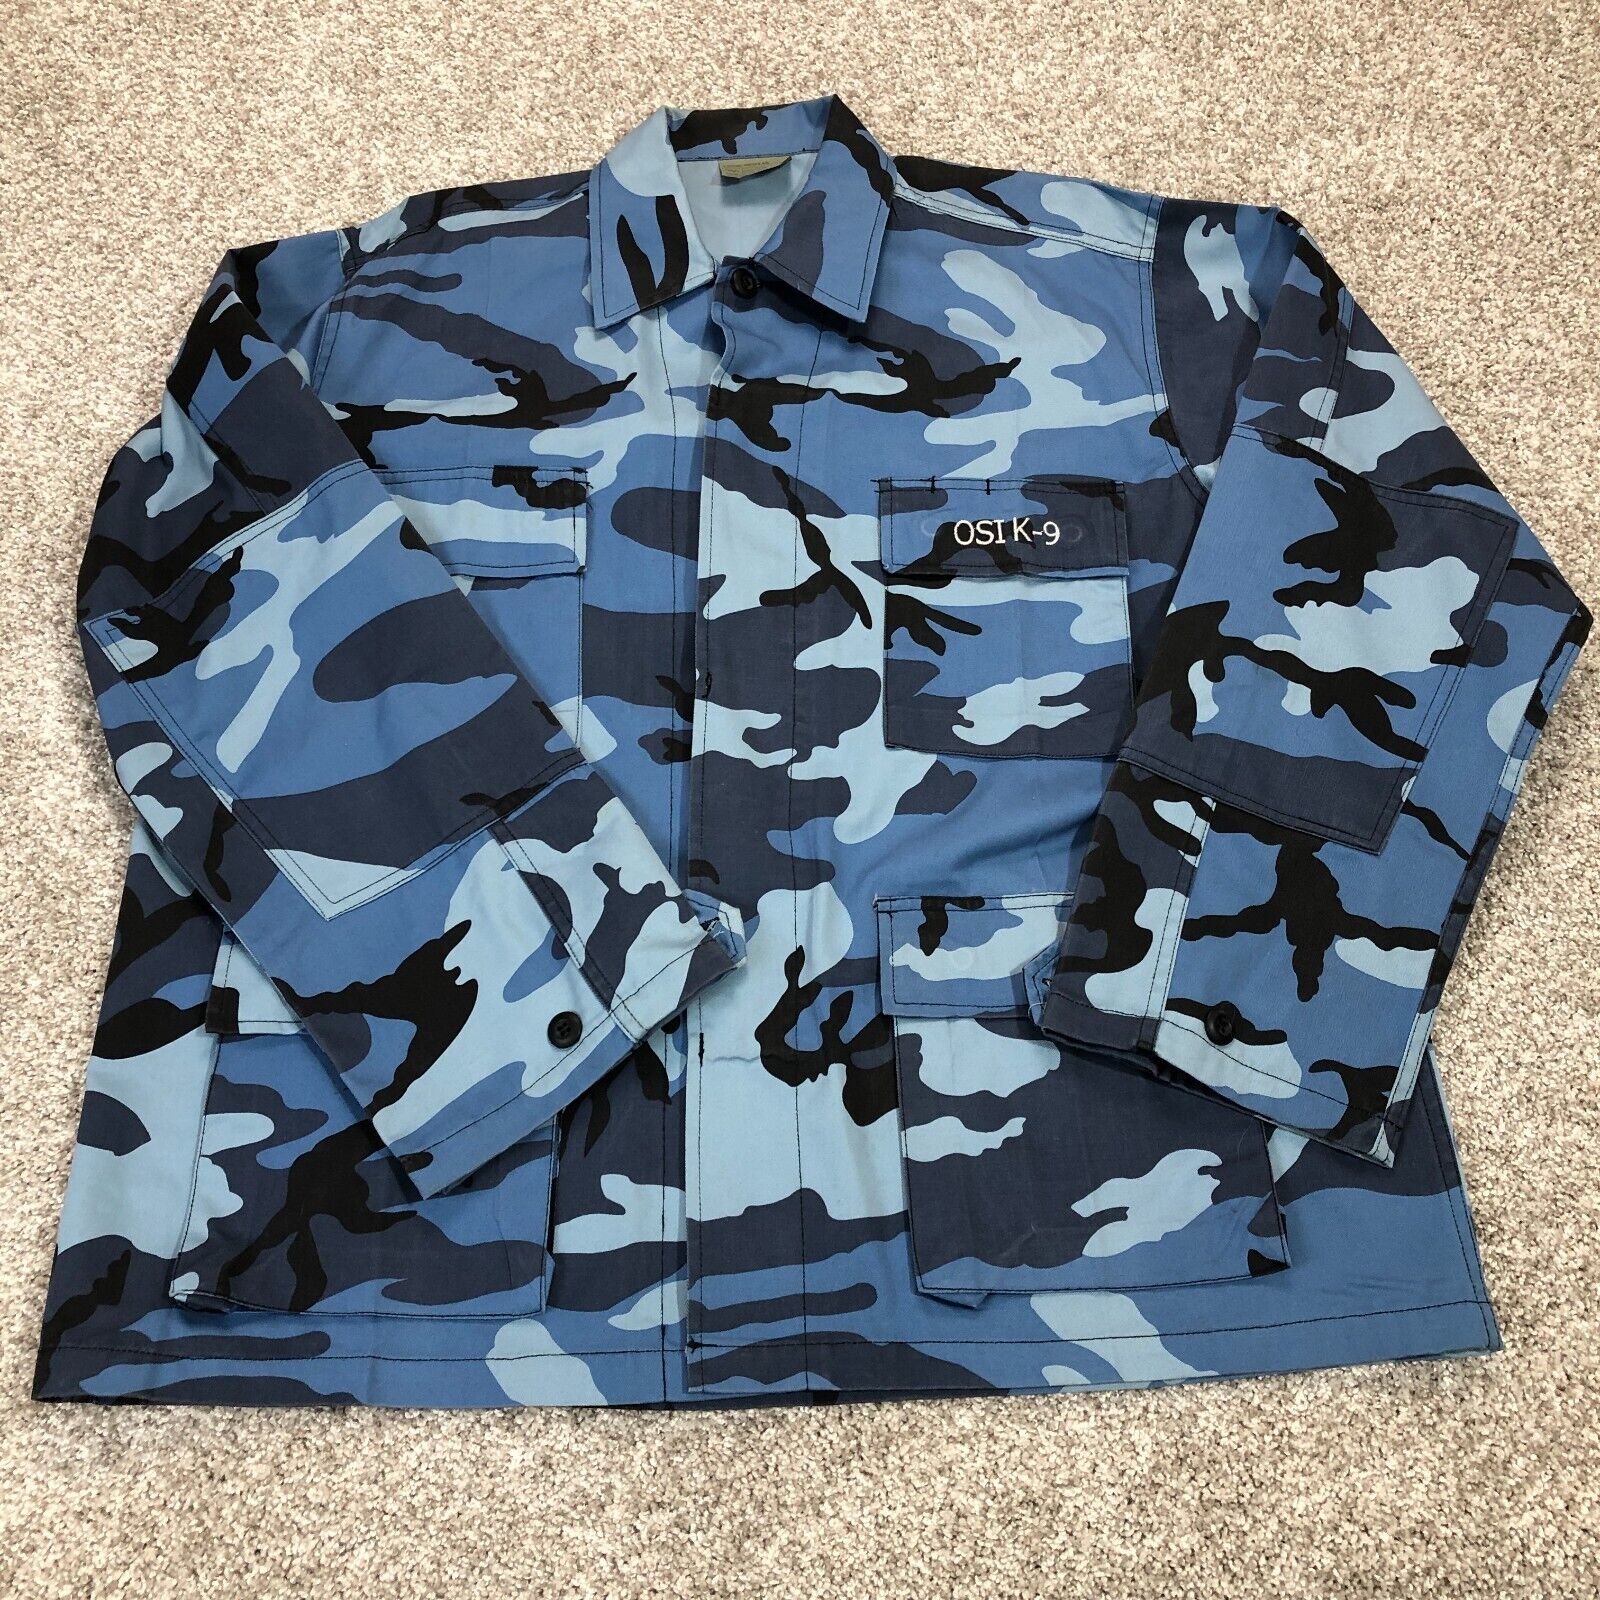 Rothco Ultra Force BDU Military Camo Blue Jacket Adult Large Regular OSIK-9 RARE